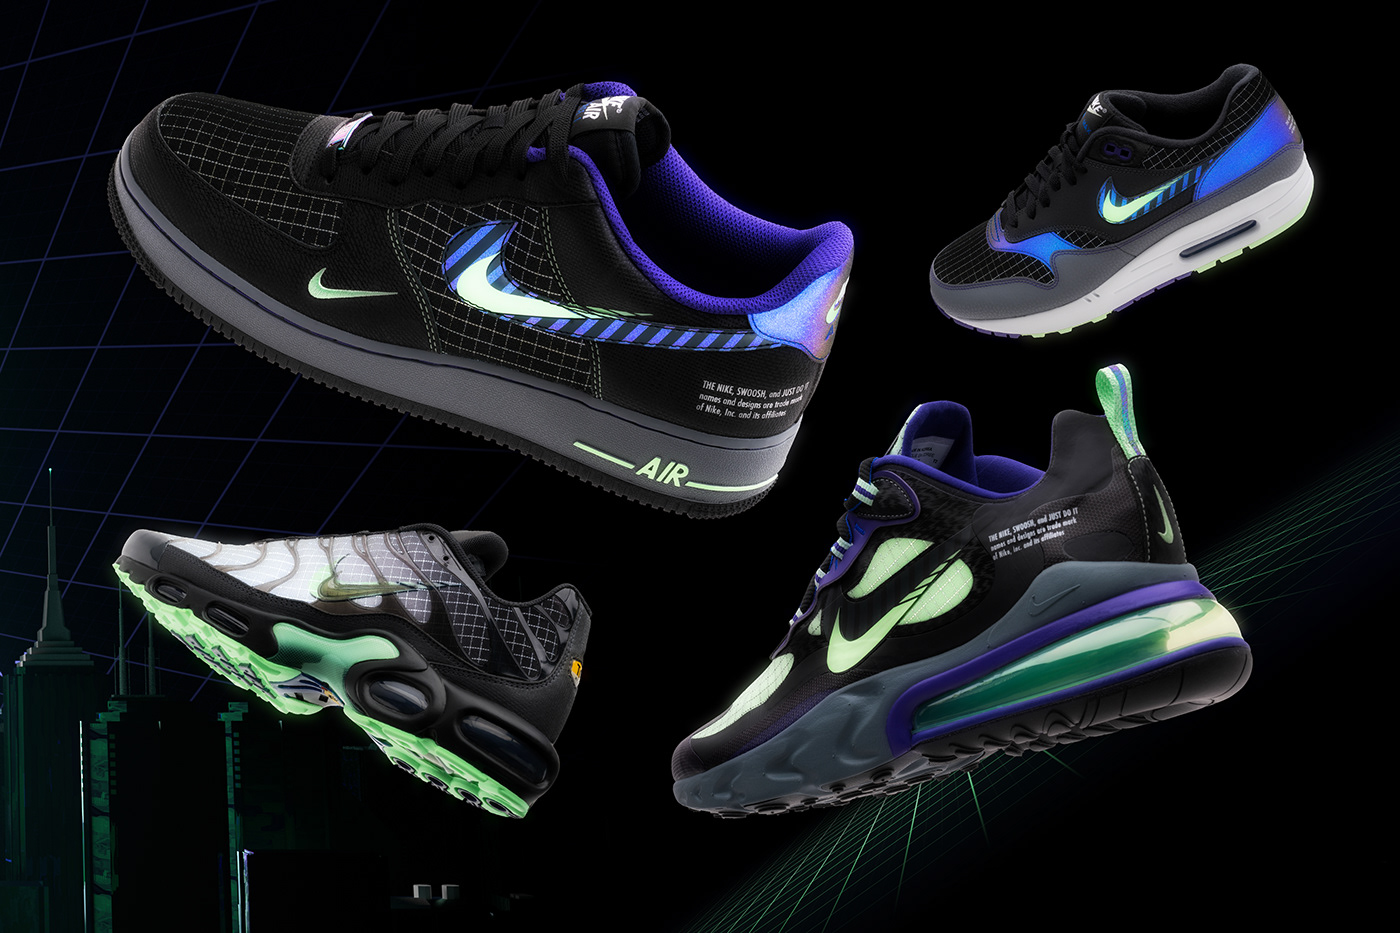 animation  3D Nike footlocker neon motion af1 air force one Swoosh nike react